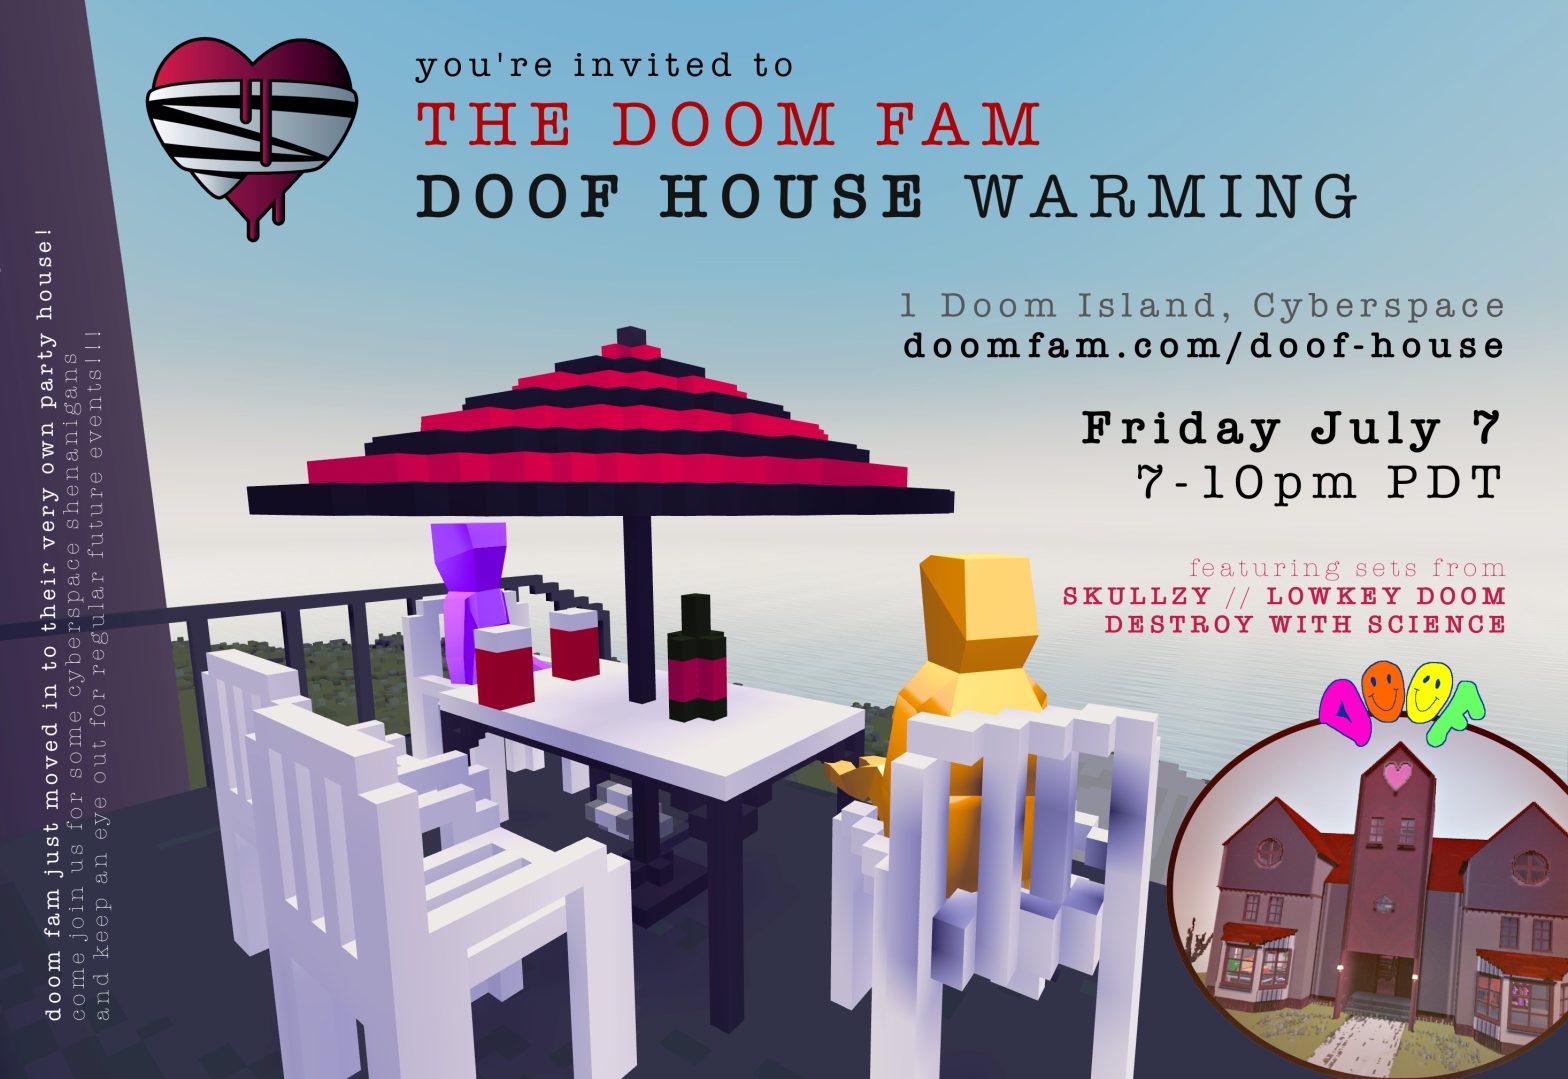 Doom Fam Doof House